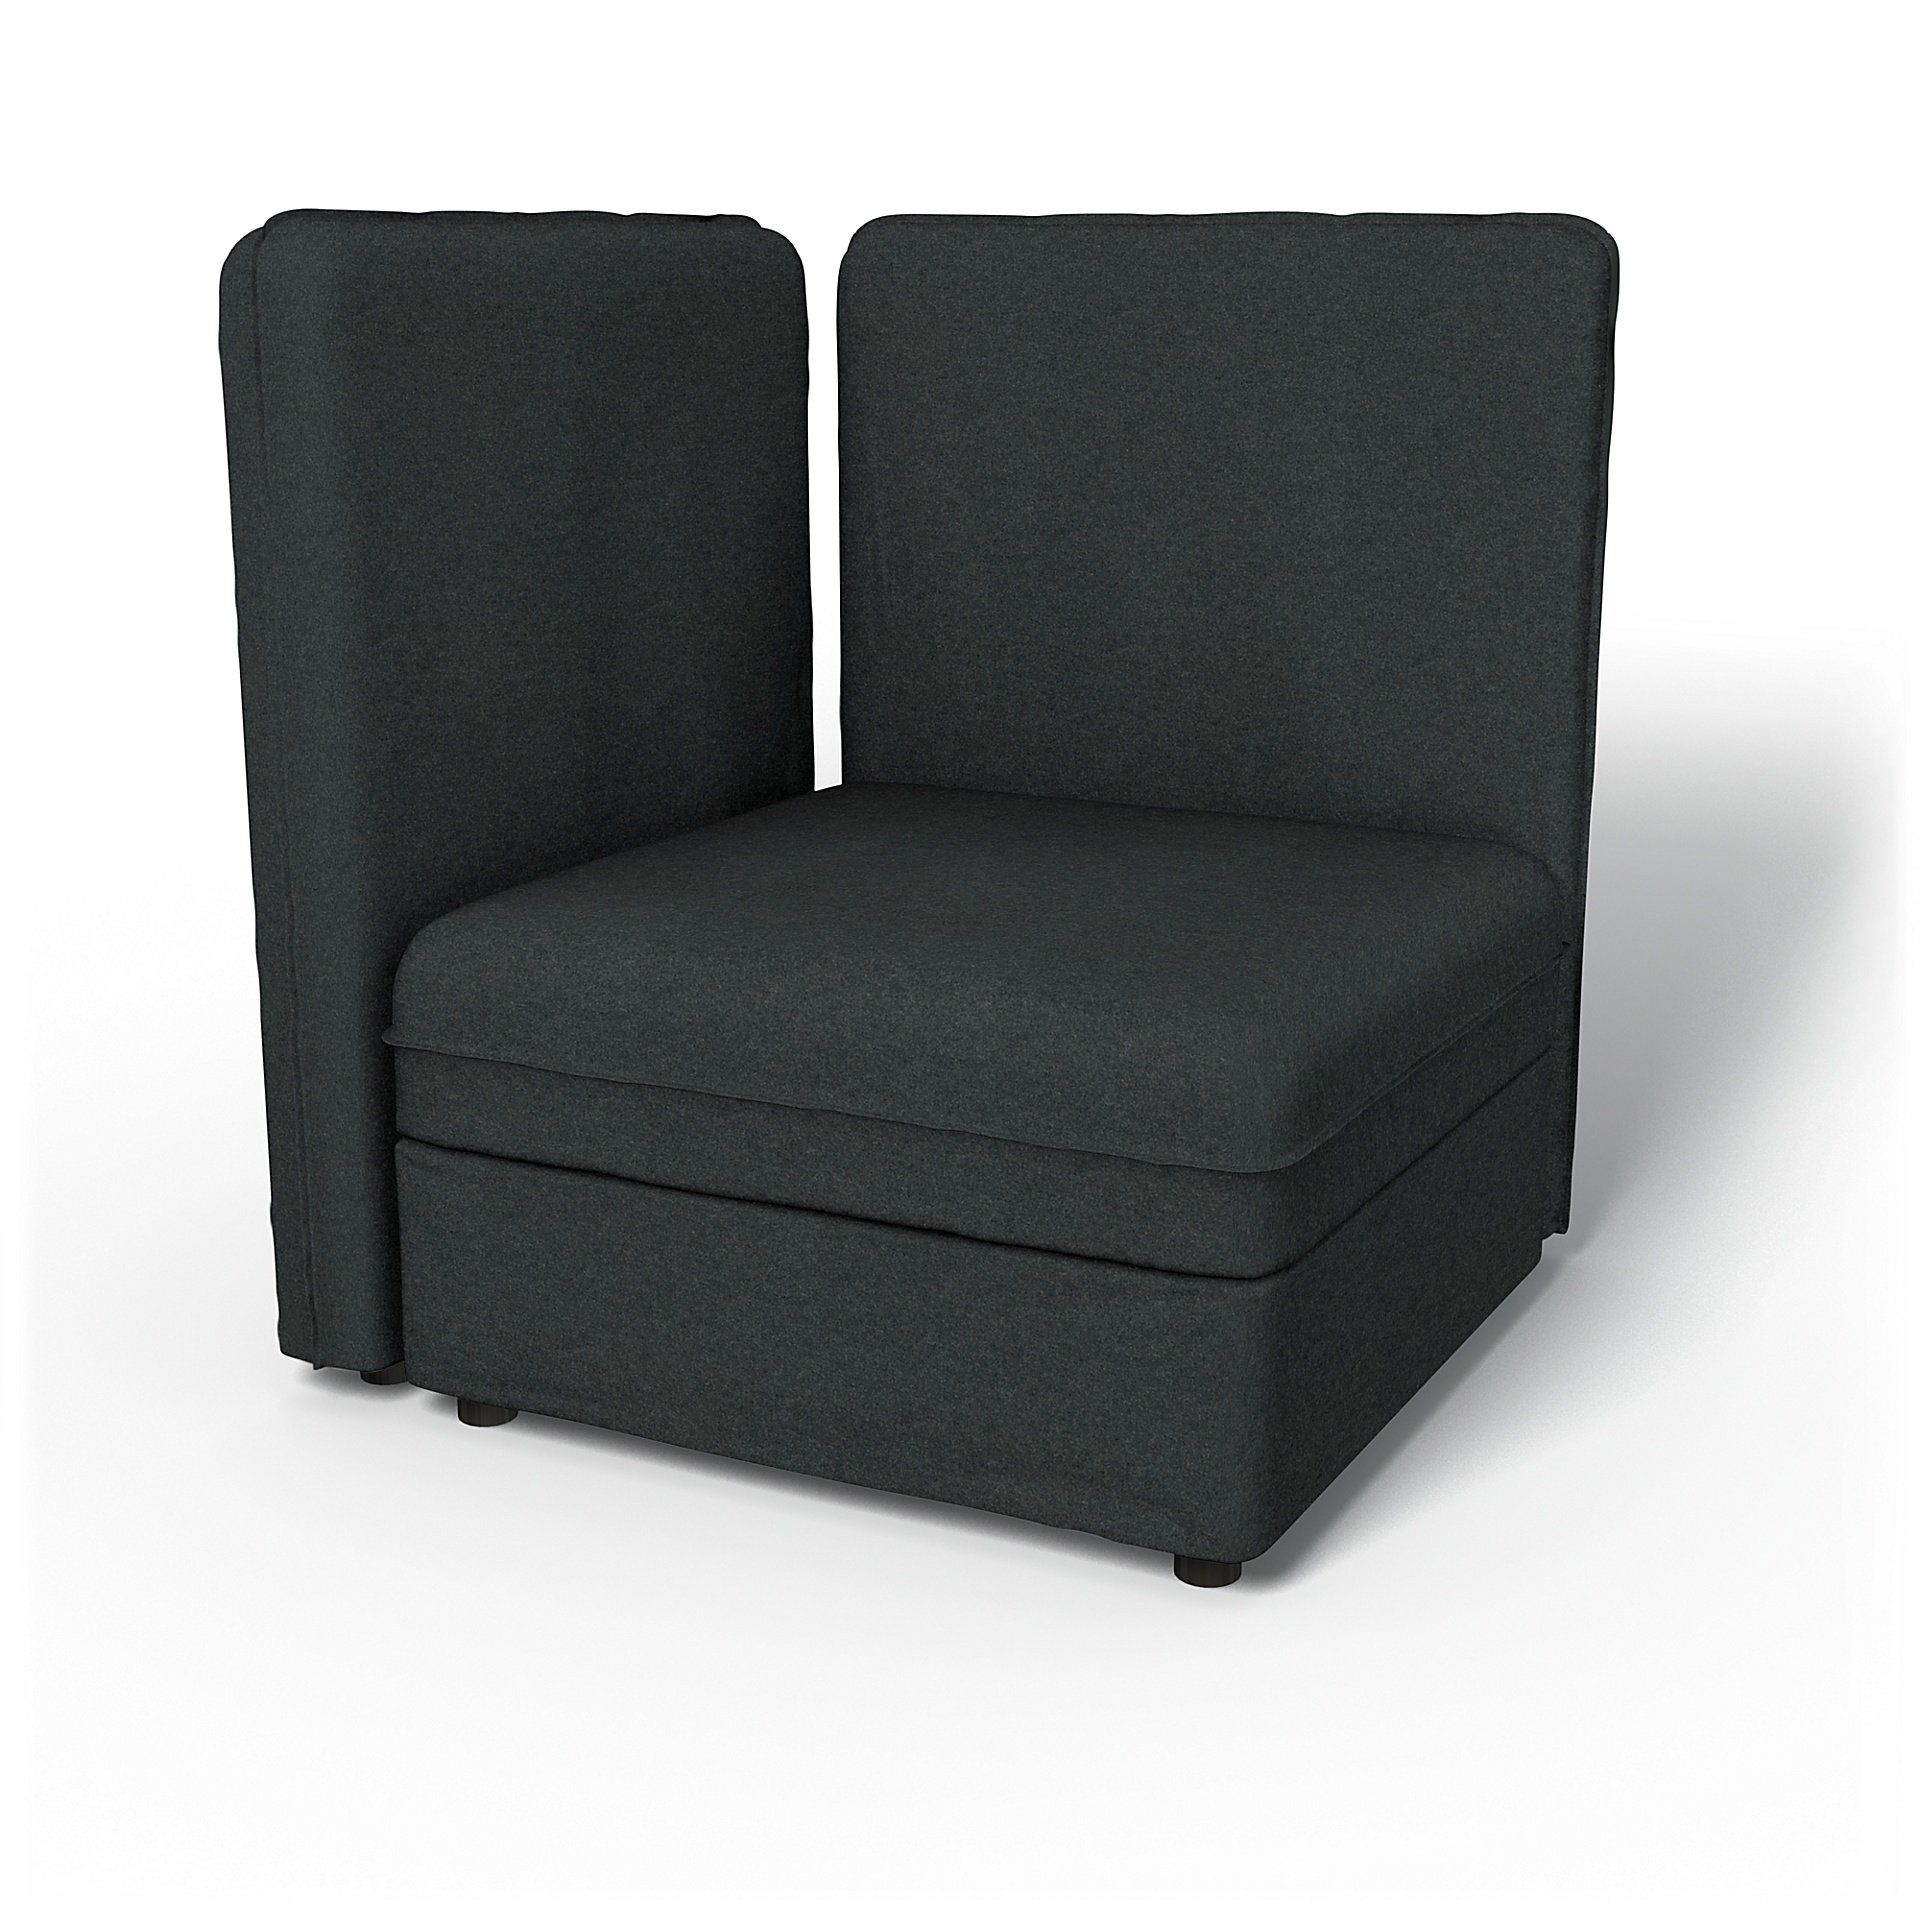 IKEA - Vallentuna Corner Seat Module with High Back and Storage Cover 80x80 32x32in, Stone, Wool - B